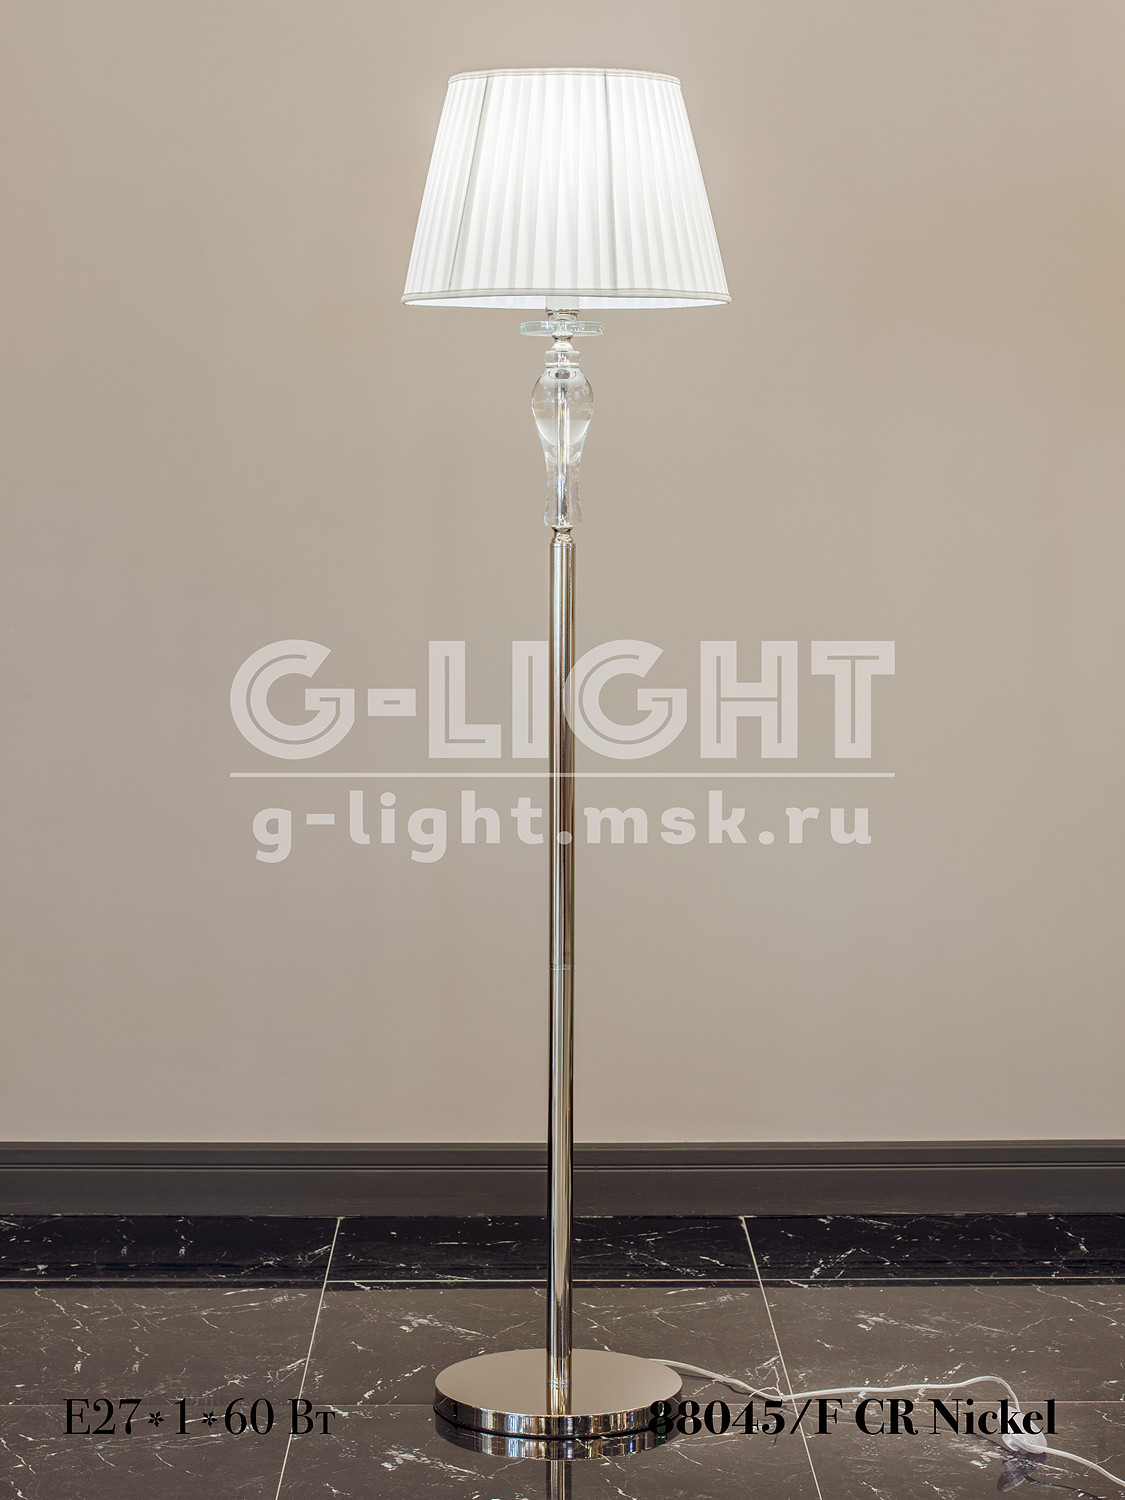 Торшер G-Light 88045/F CR Nickel - изображение 5